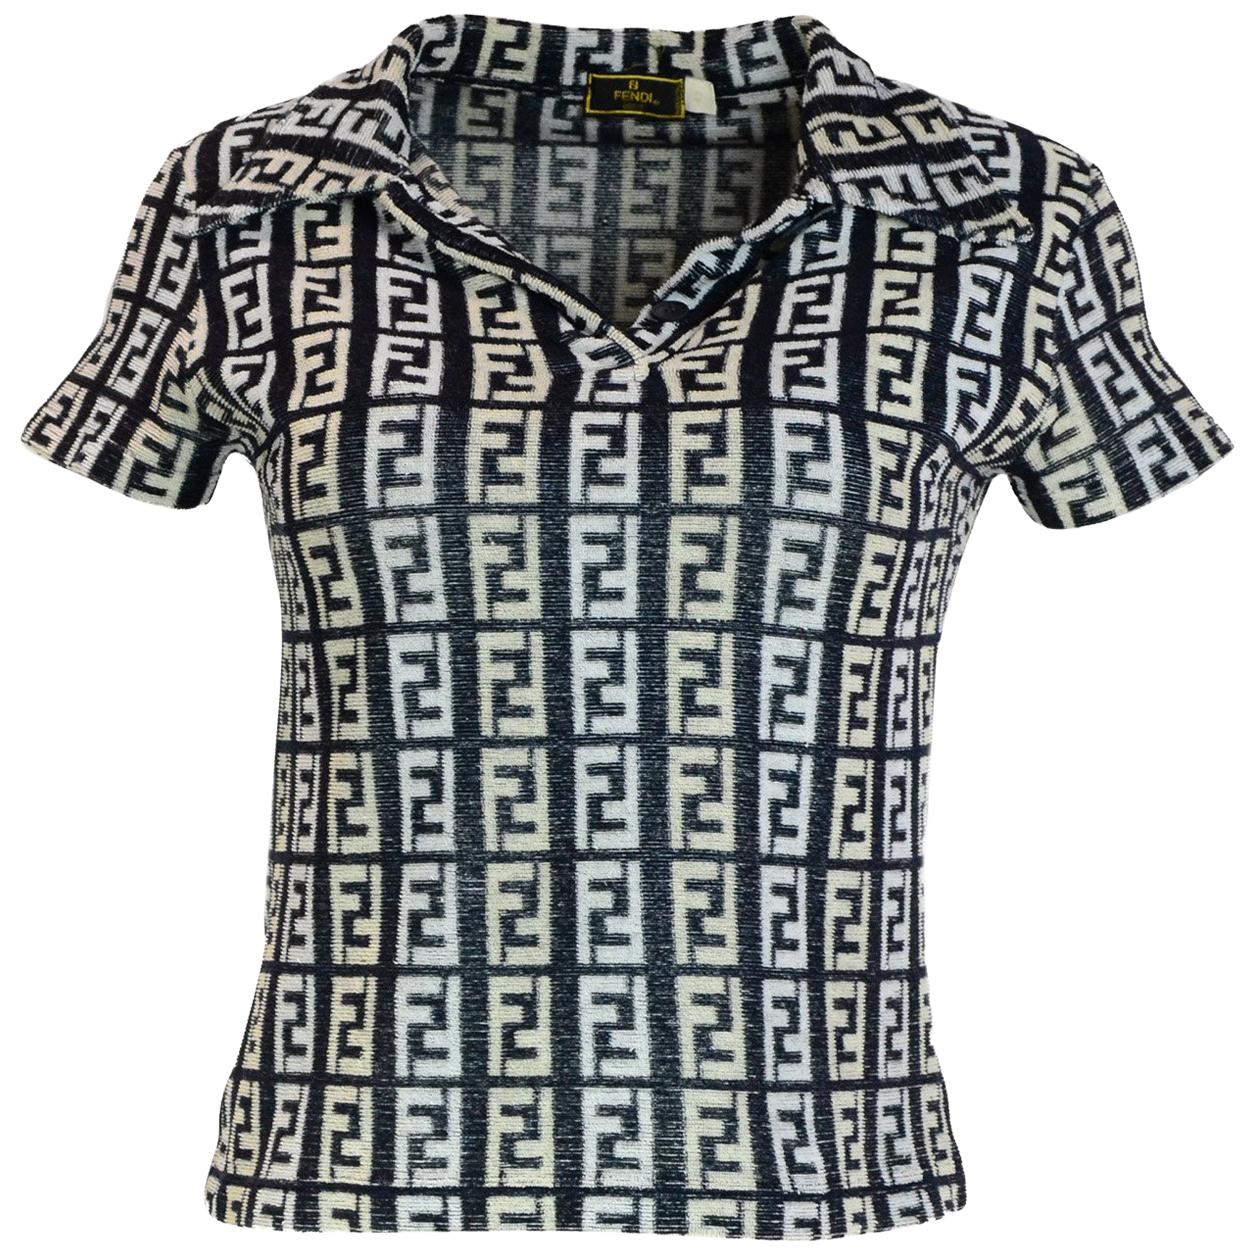 Kleding Dameskleding Tops & T-shirts Polos Fendi Zucca Print Polo Shirt Sz S 